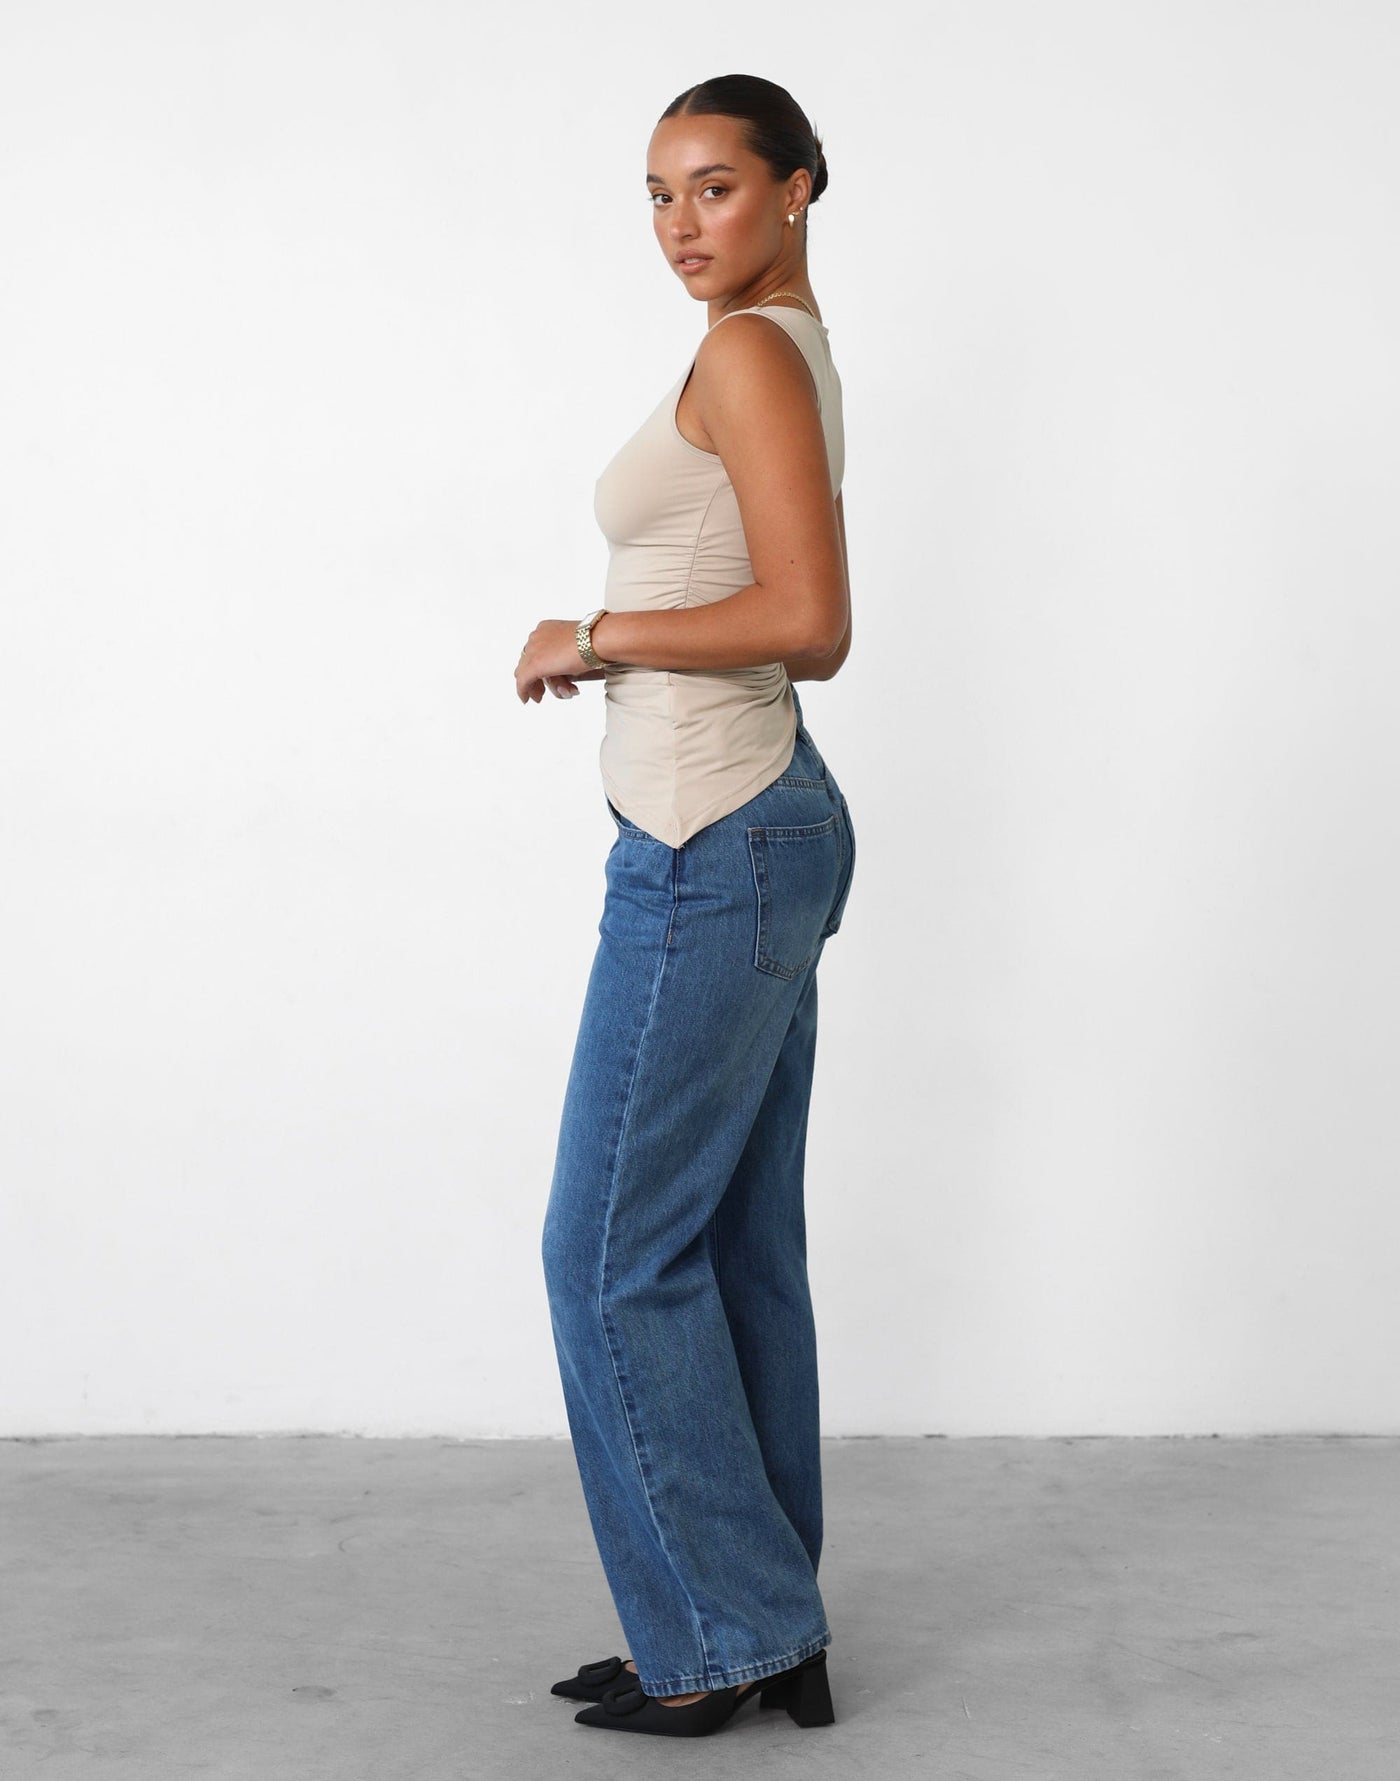 Daya Top (Beige) - Asymmetrical Hem Sleeveless Top - Women's Top - Charcoal Clothing